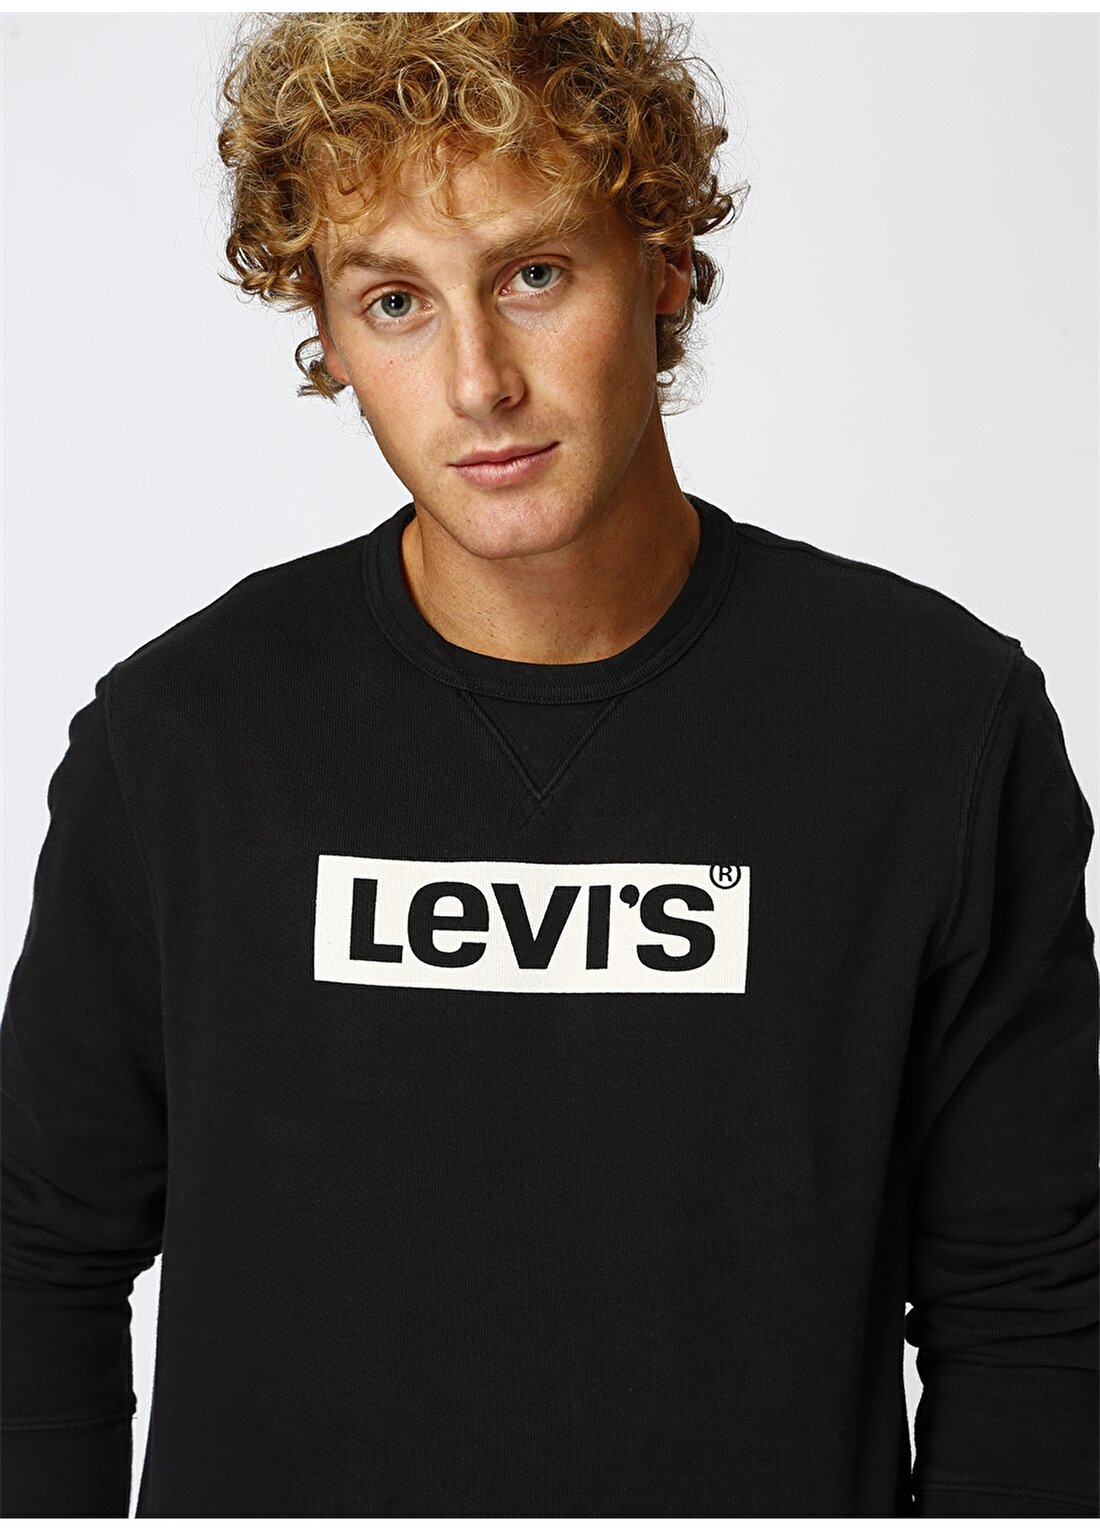 Levis Graphic Crew Sweatshirt